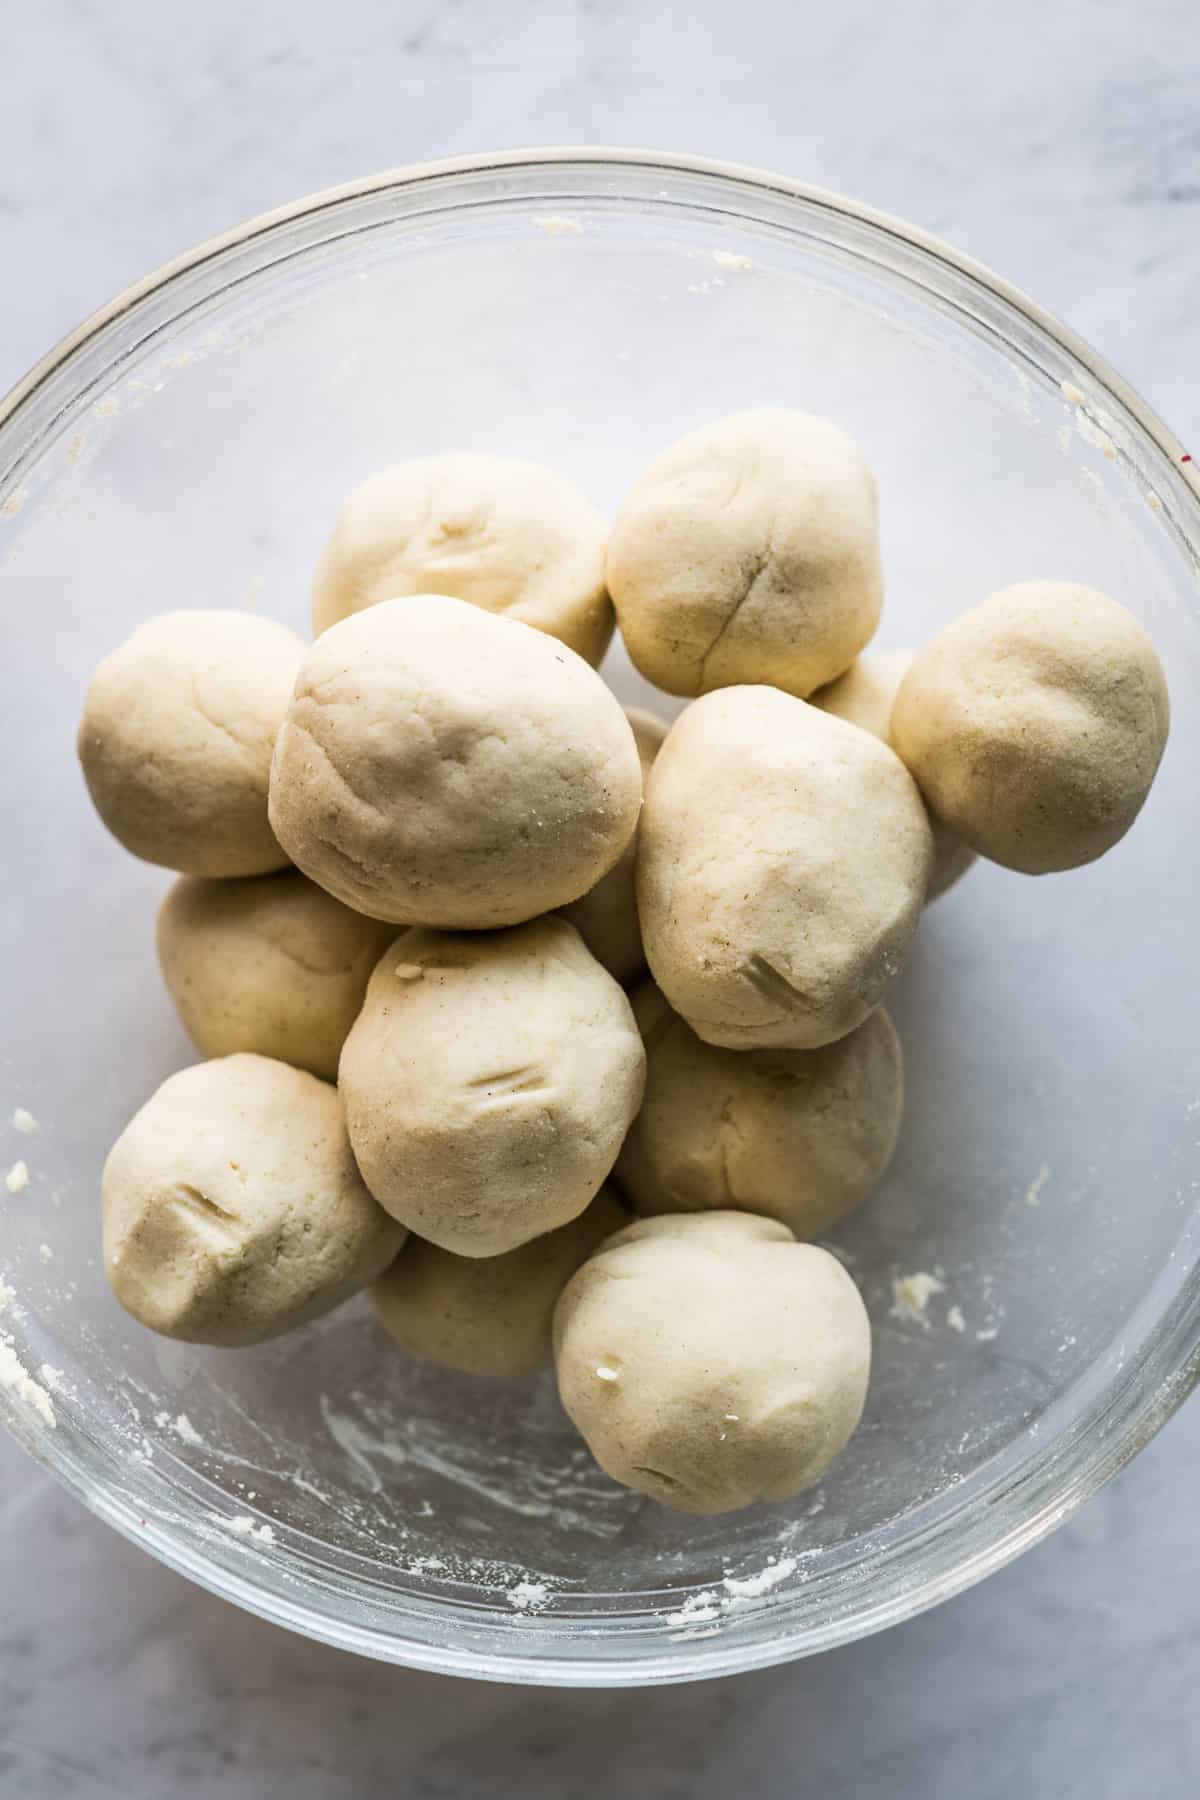 10 balls of prepared masa harina in a bowl.